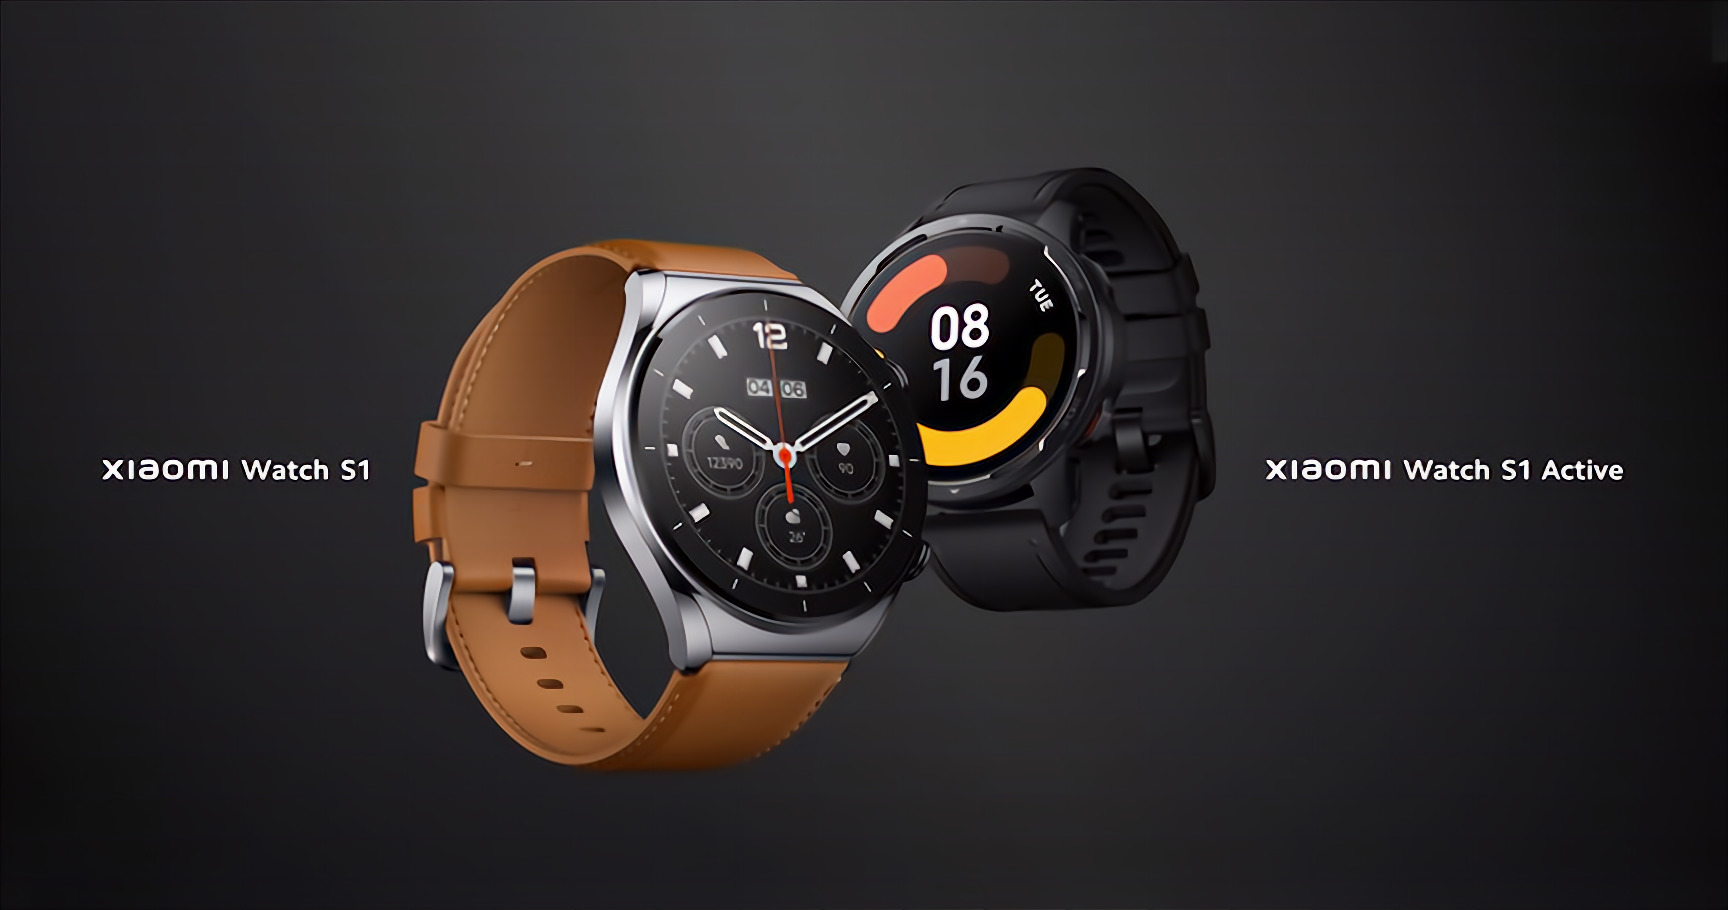 Watch xiaomi сравнить. Xiaomi watch s1 и s1 Active. Смарт часы Xiaomi s1. Смарт часы Ксиаоми вотч s1 Актив. Часы Xiaomi watch s1 Active.